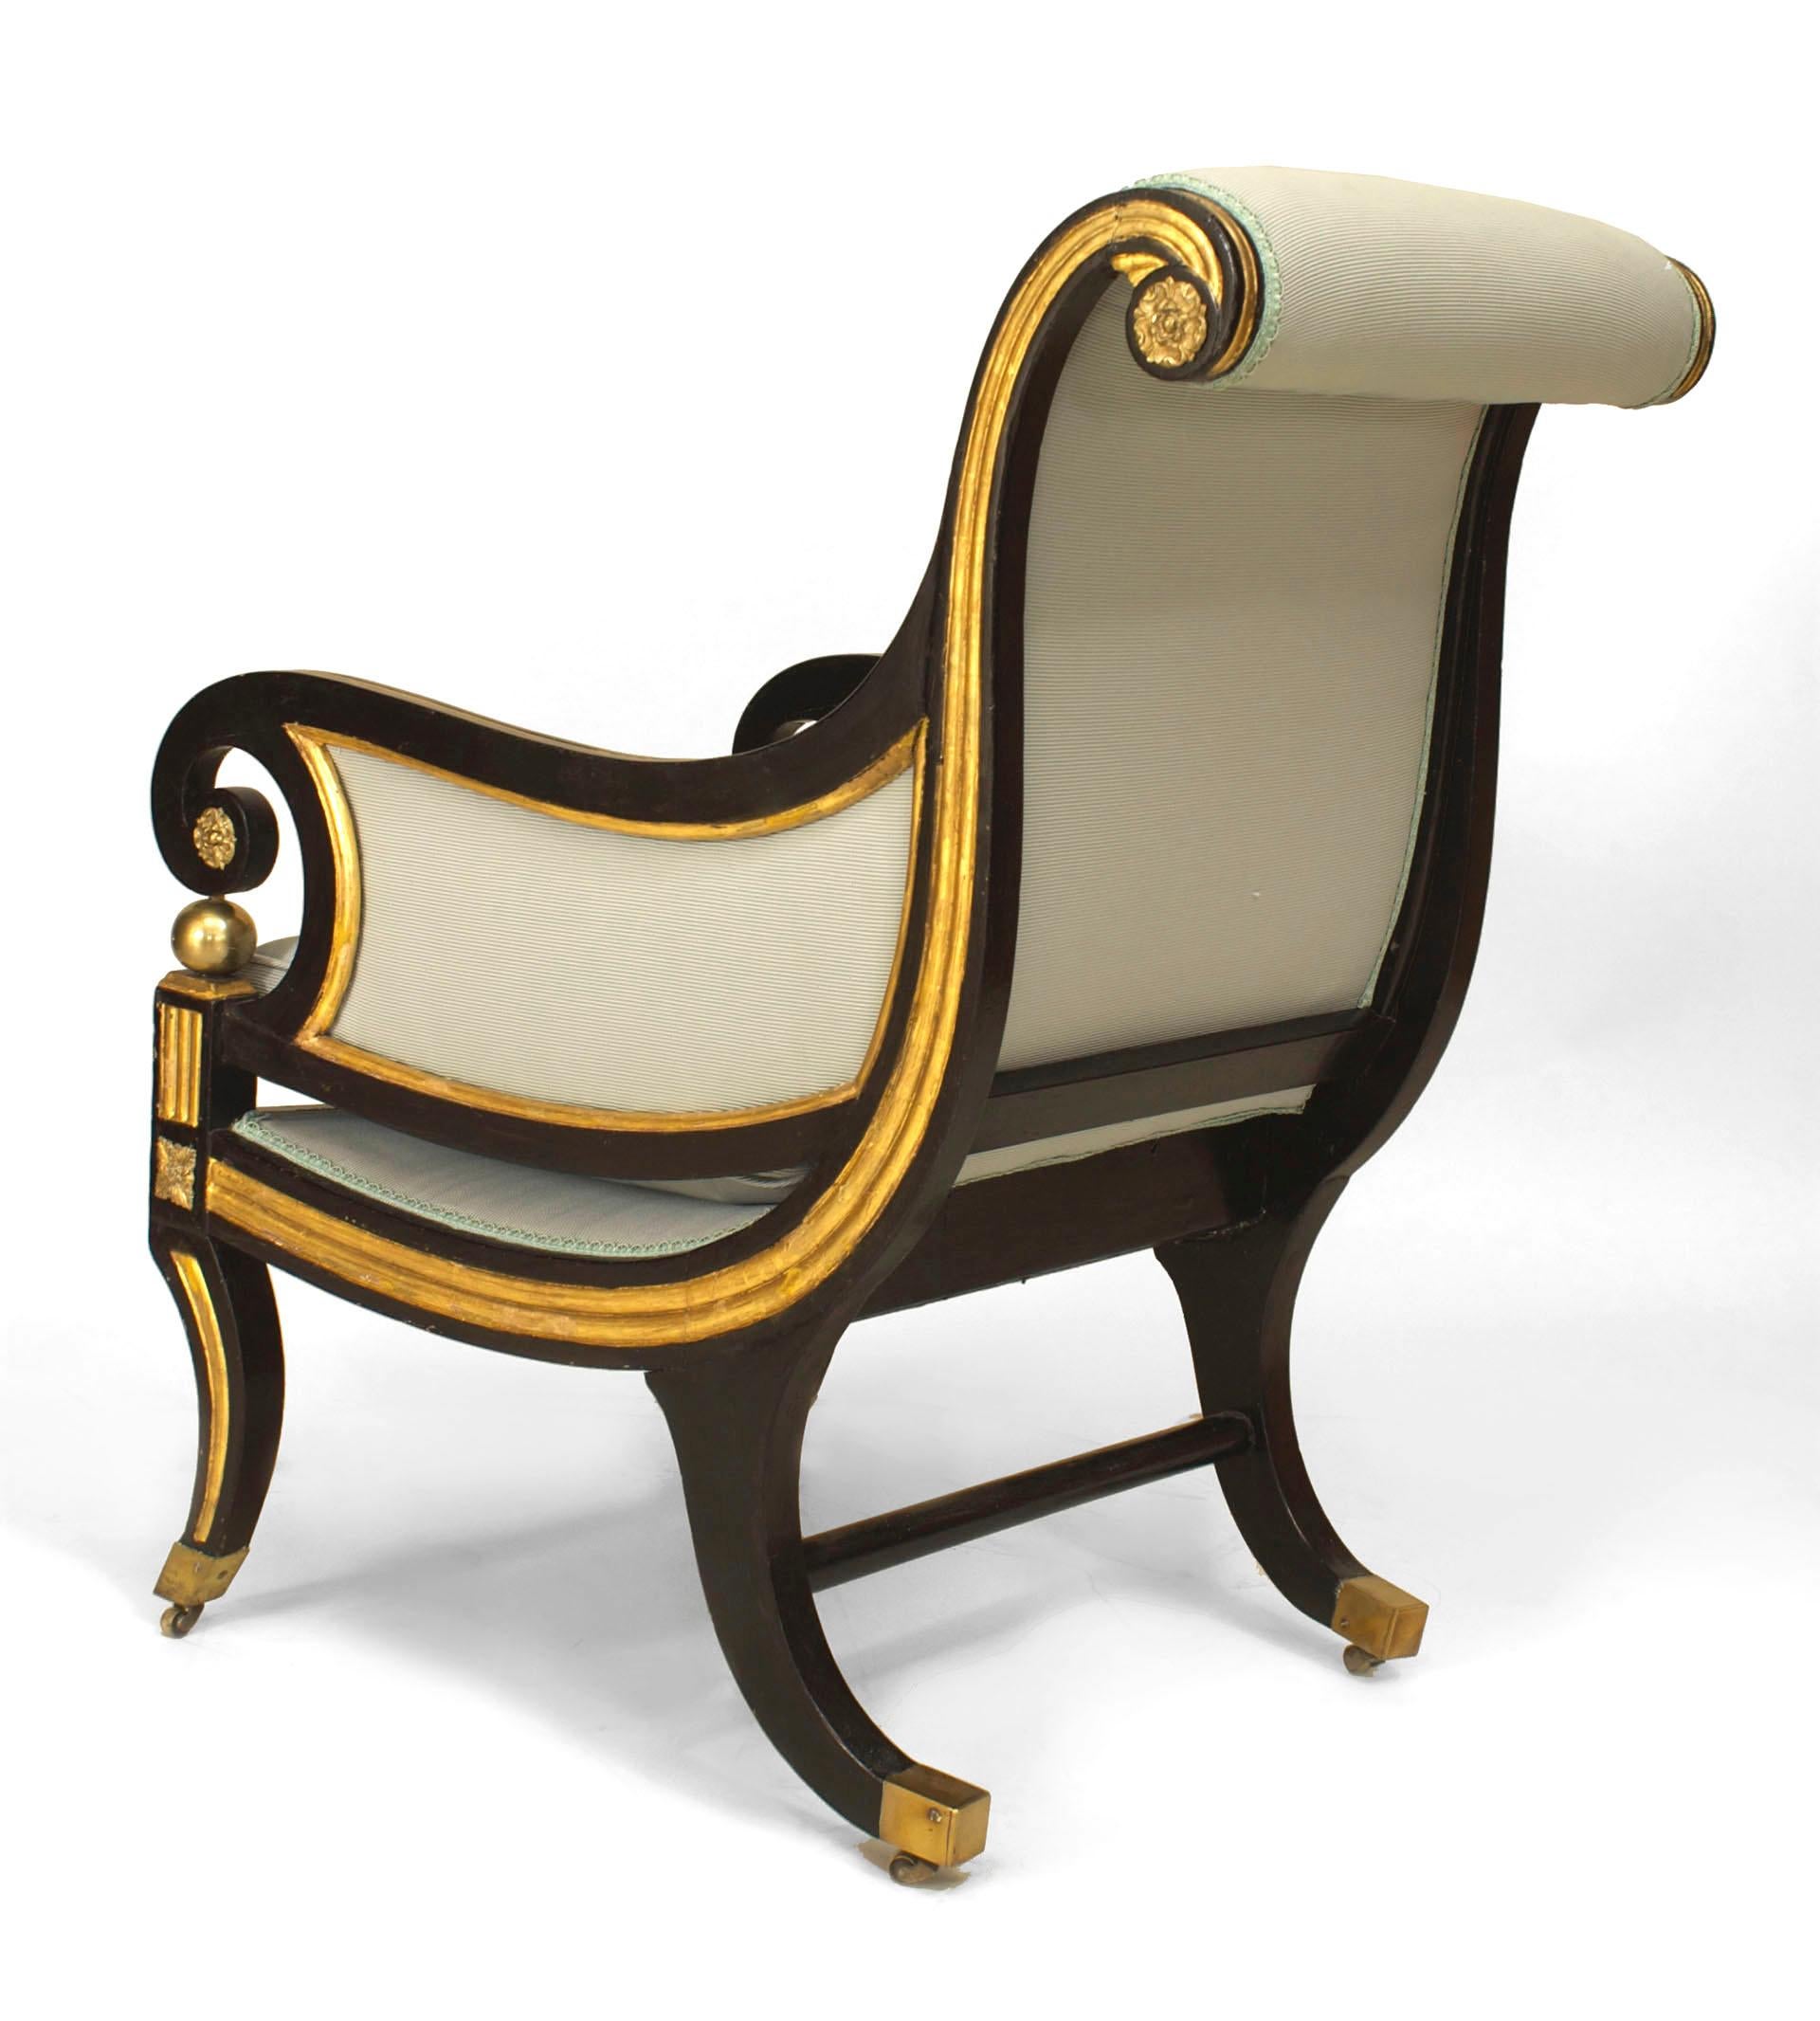 19th Century Early 19th c. English Regency Club Chair - 1stdibs New York